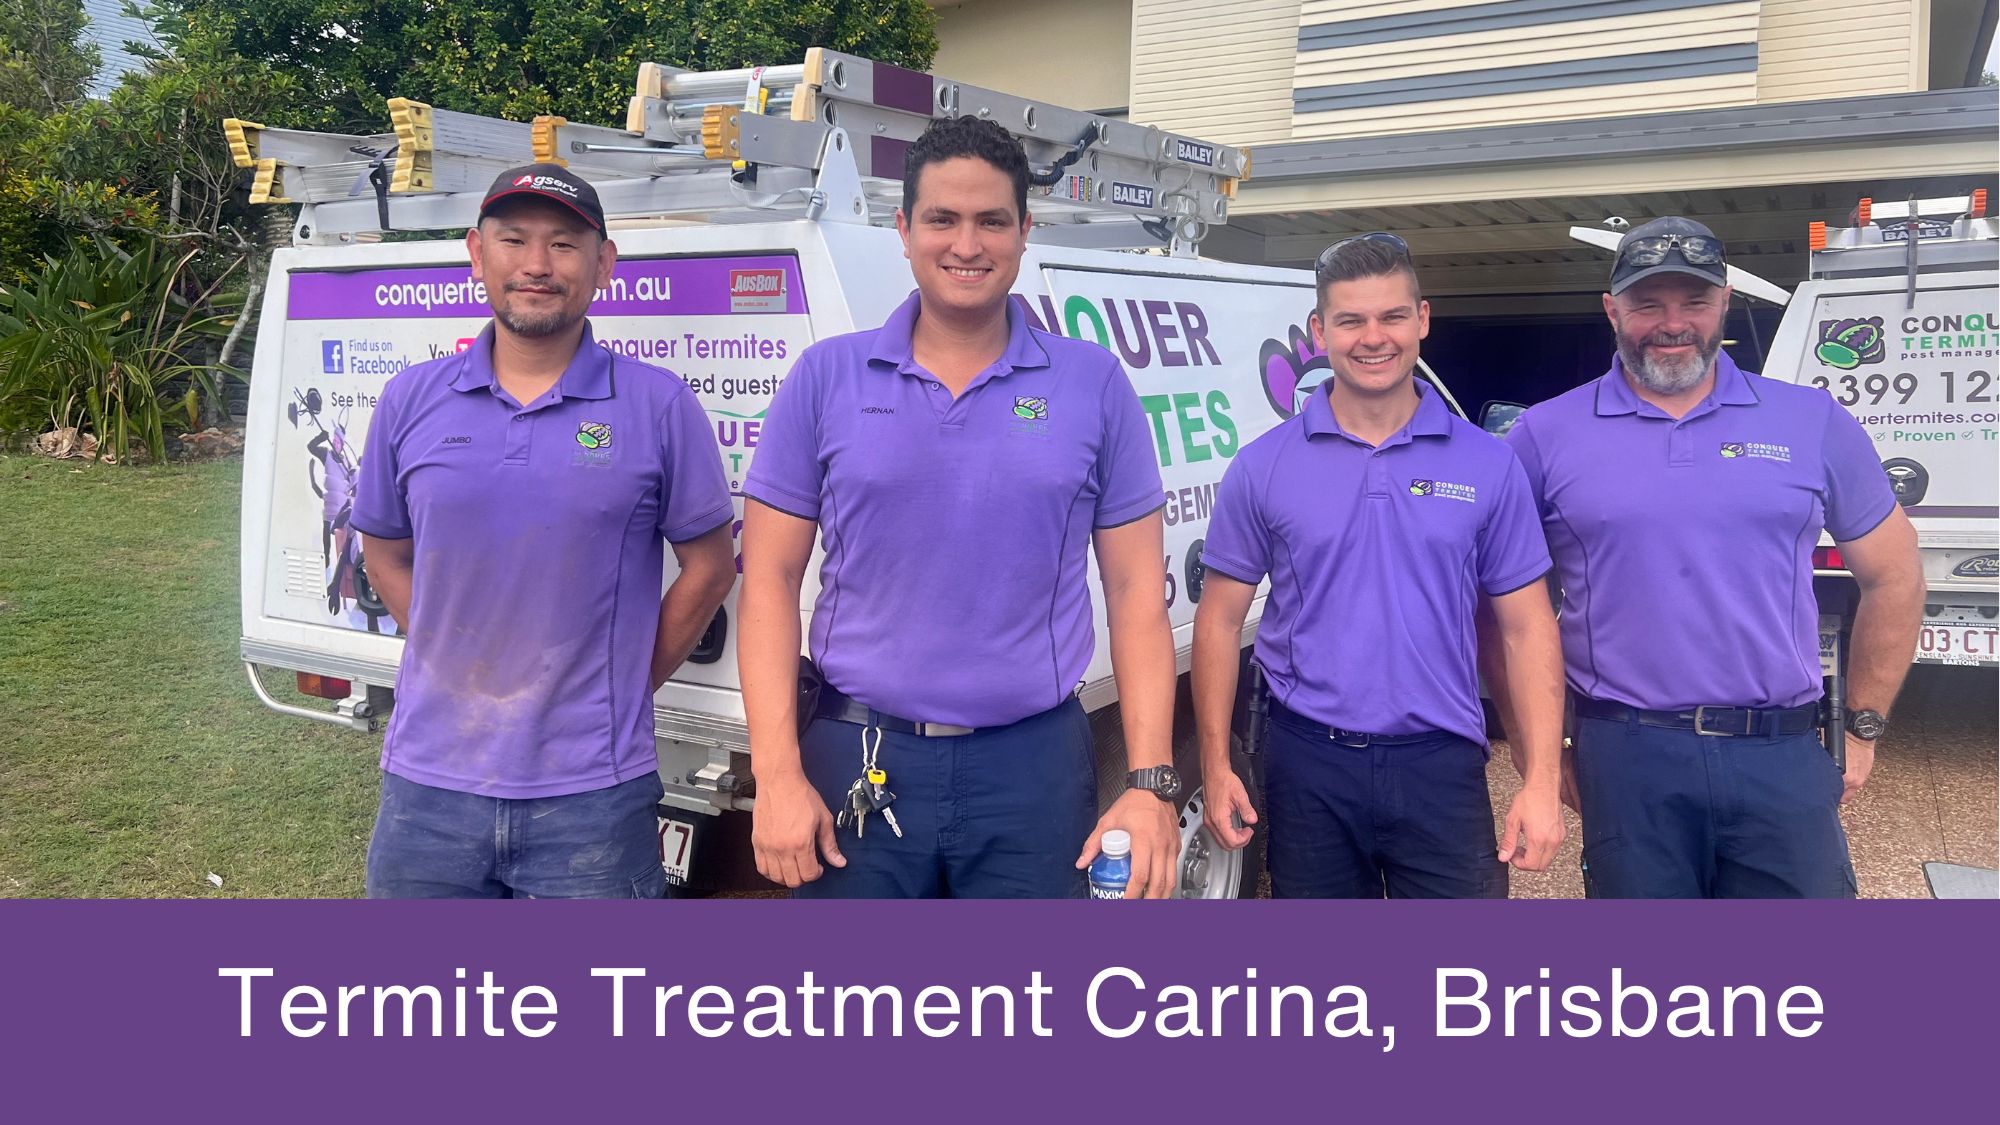 Happy Termite Treatment Crew in Carina, Brisbane